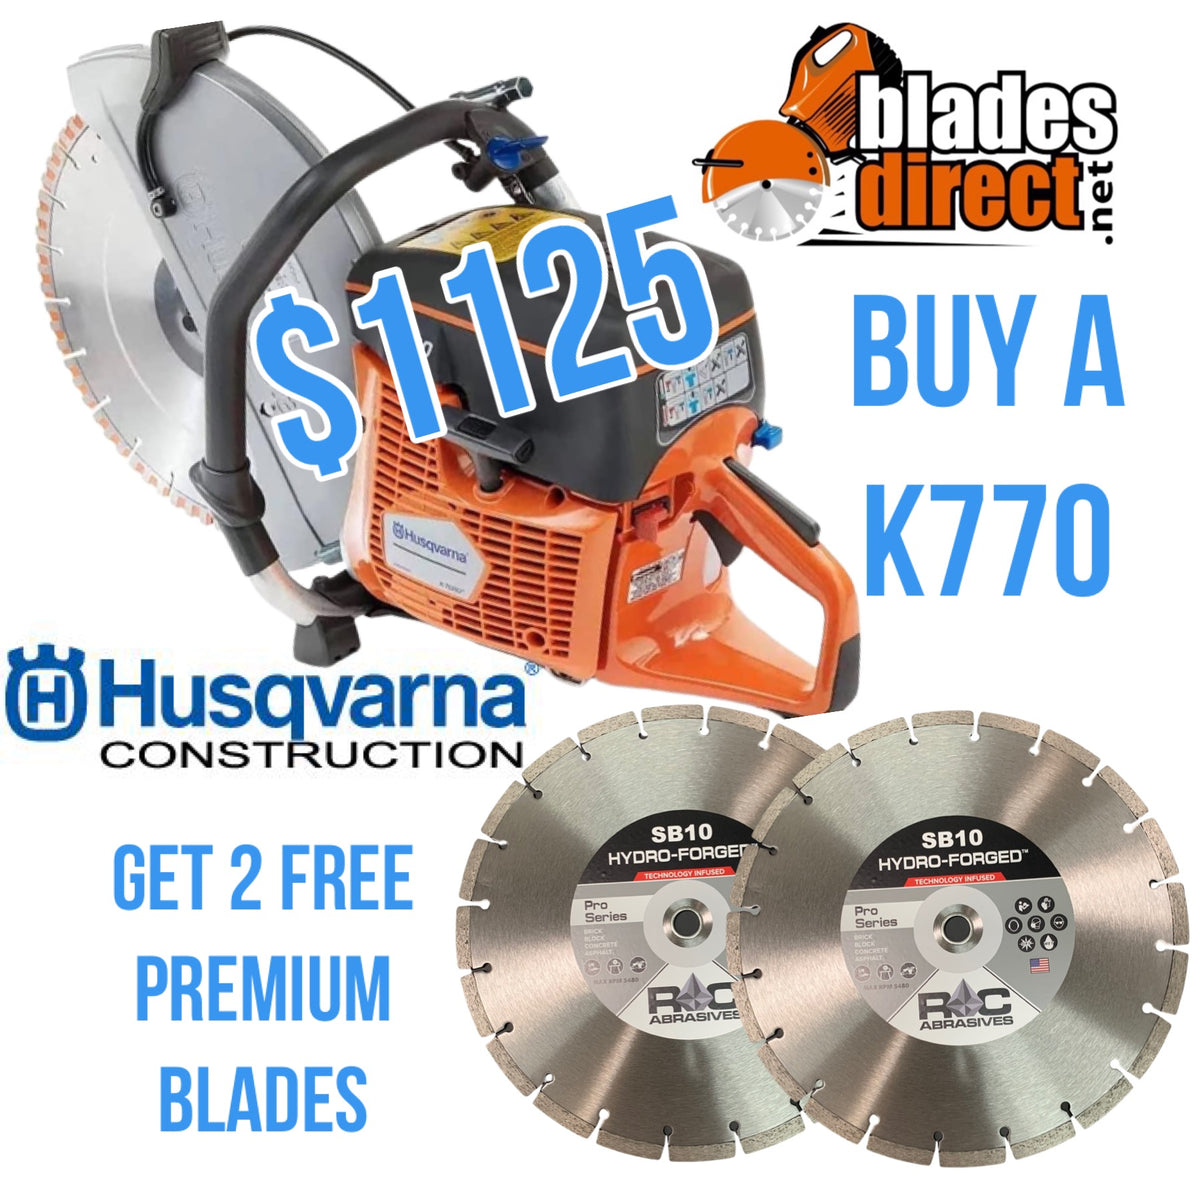 Husqvarna FS 413 Concrete Saw - Tools Direct USA